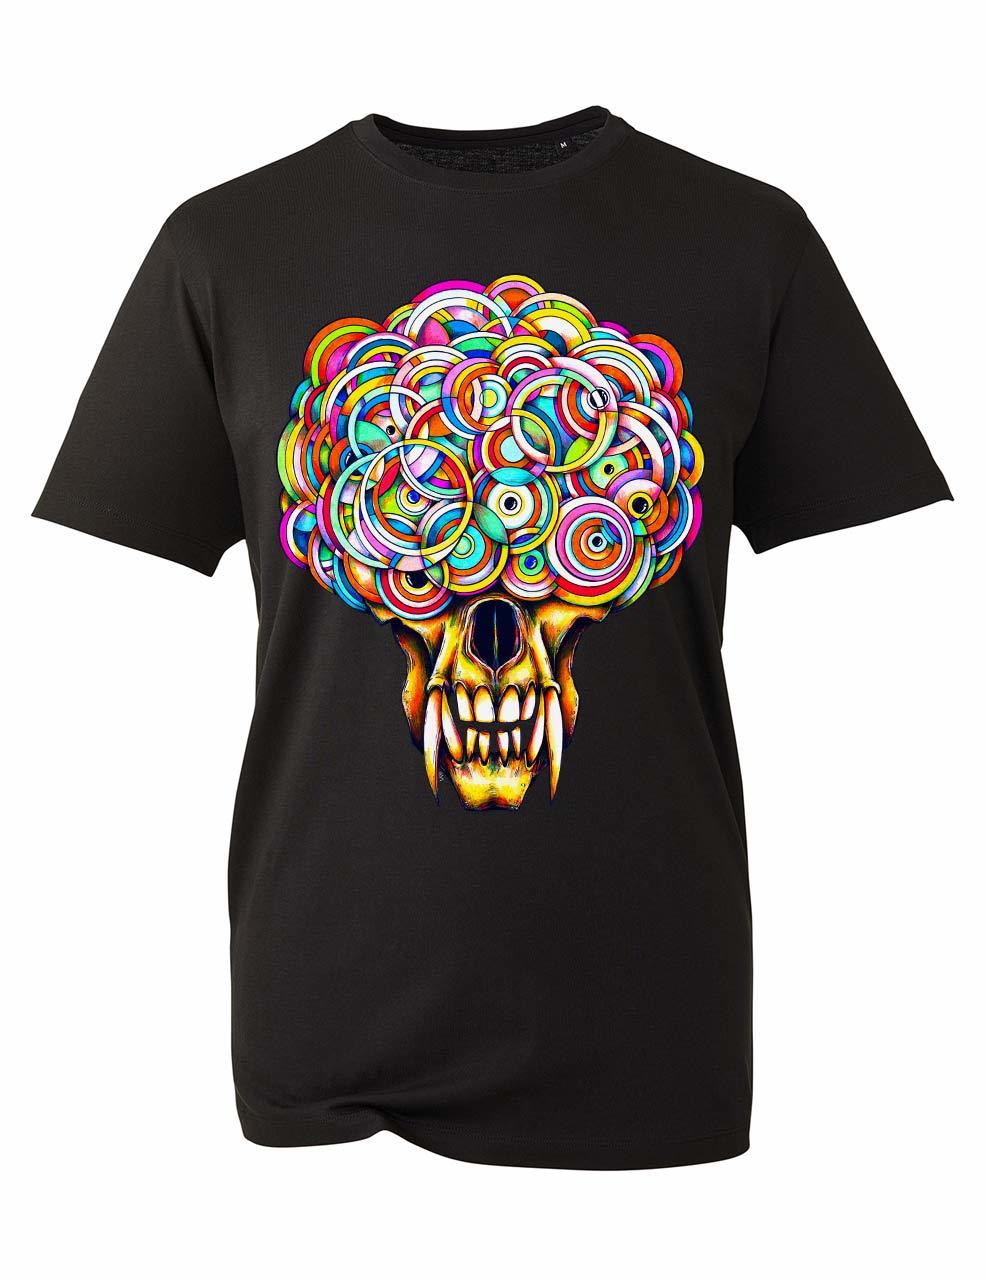 Neuro Illogical T-shirt by Ben Avlis